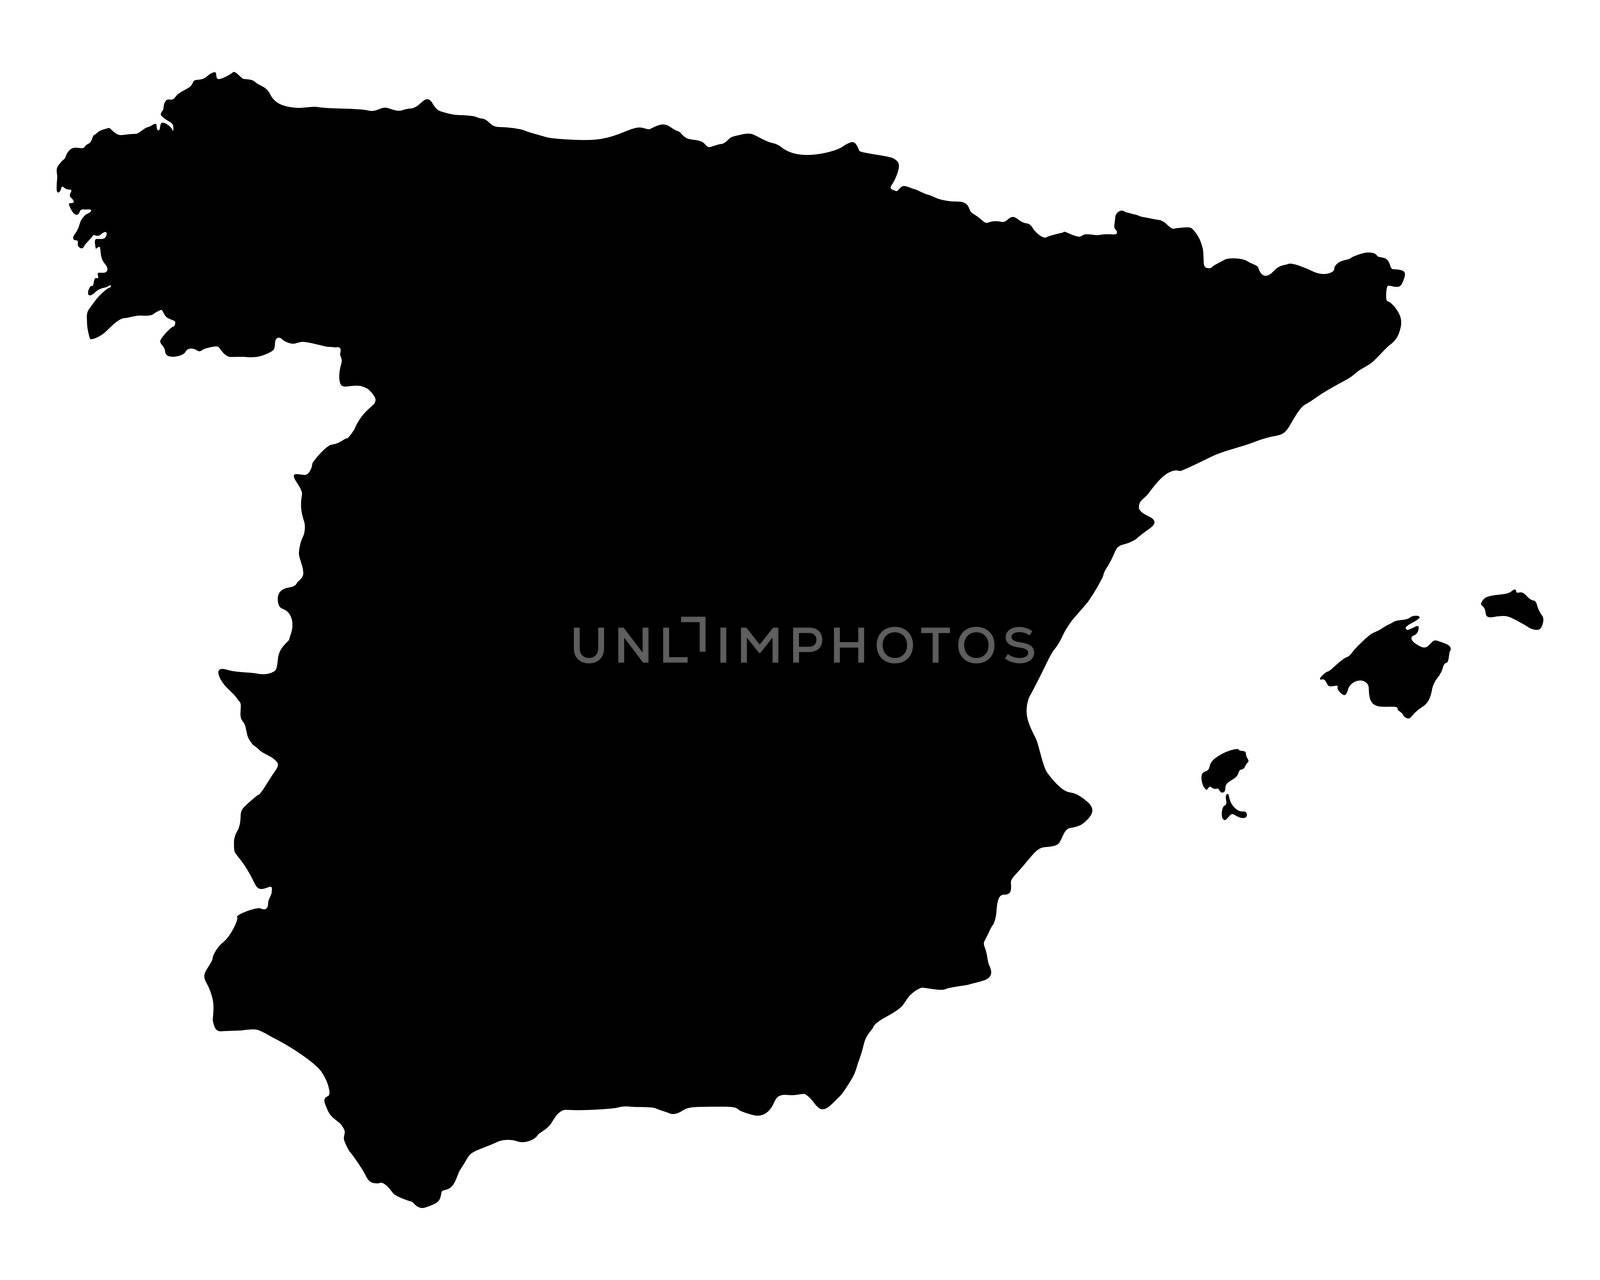 Map of Spain by rbiedermann